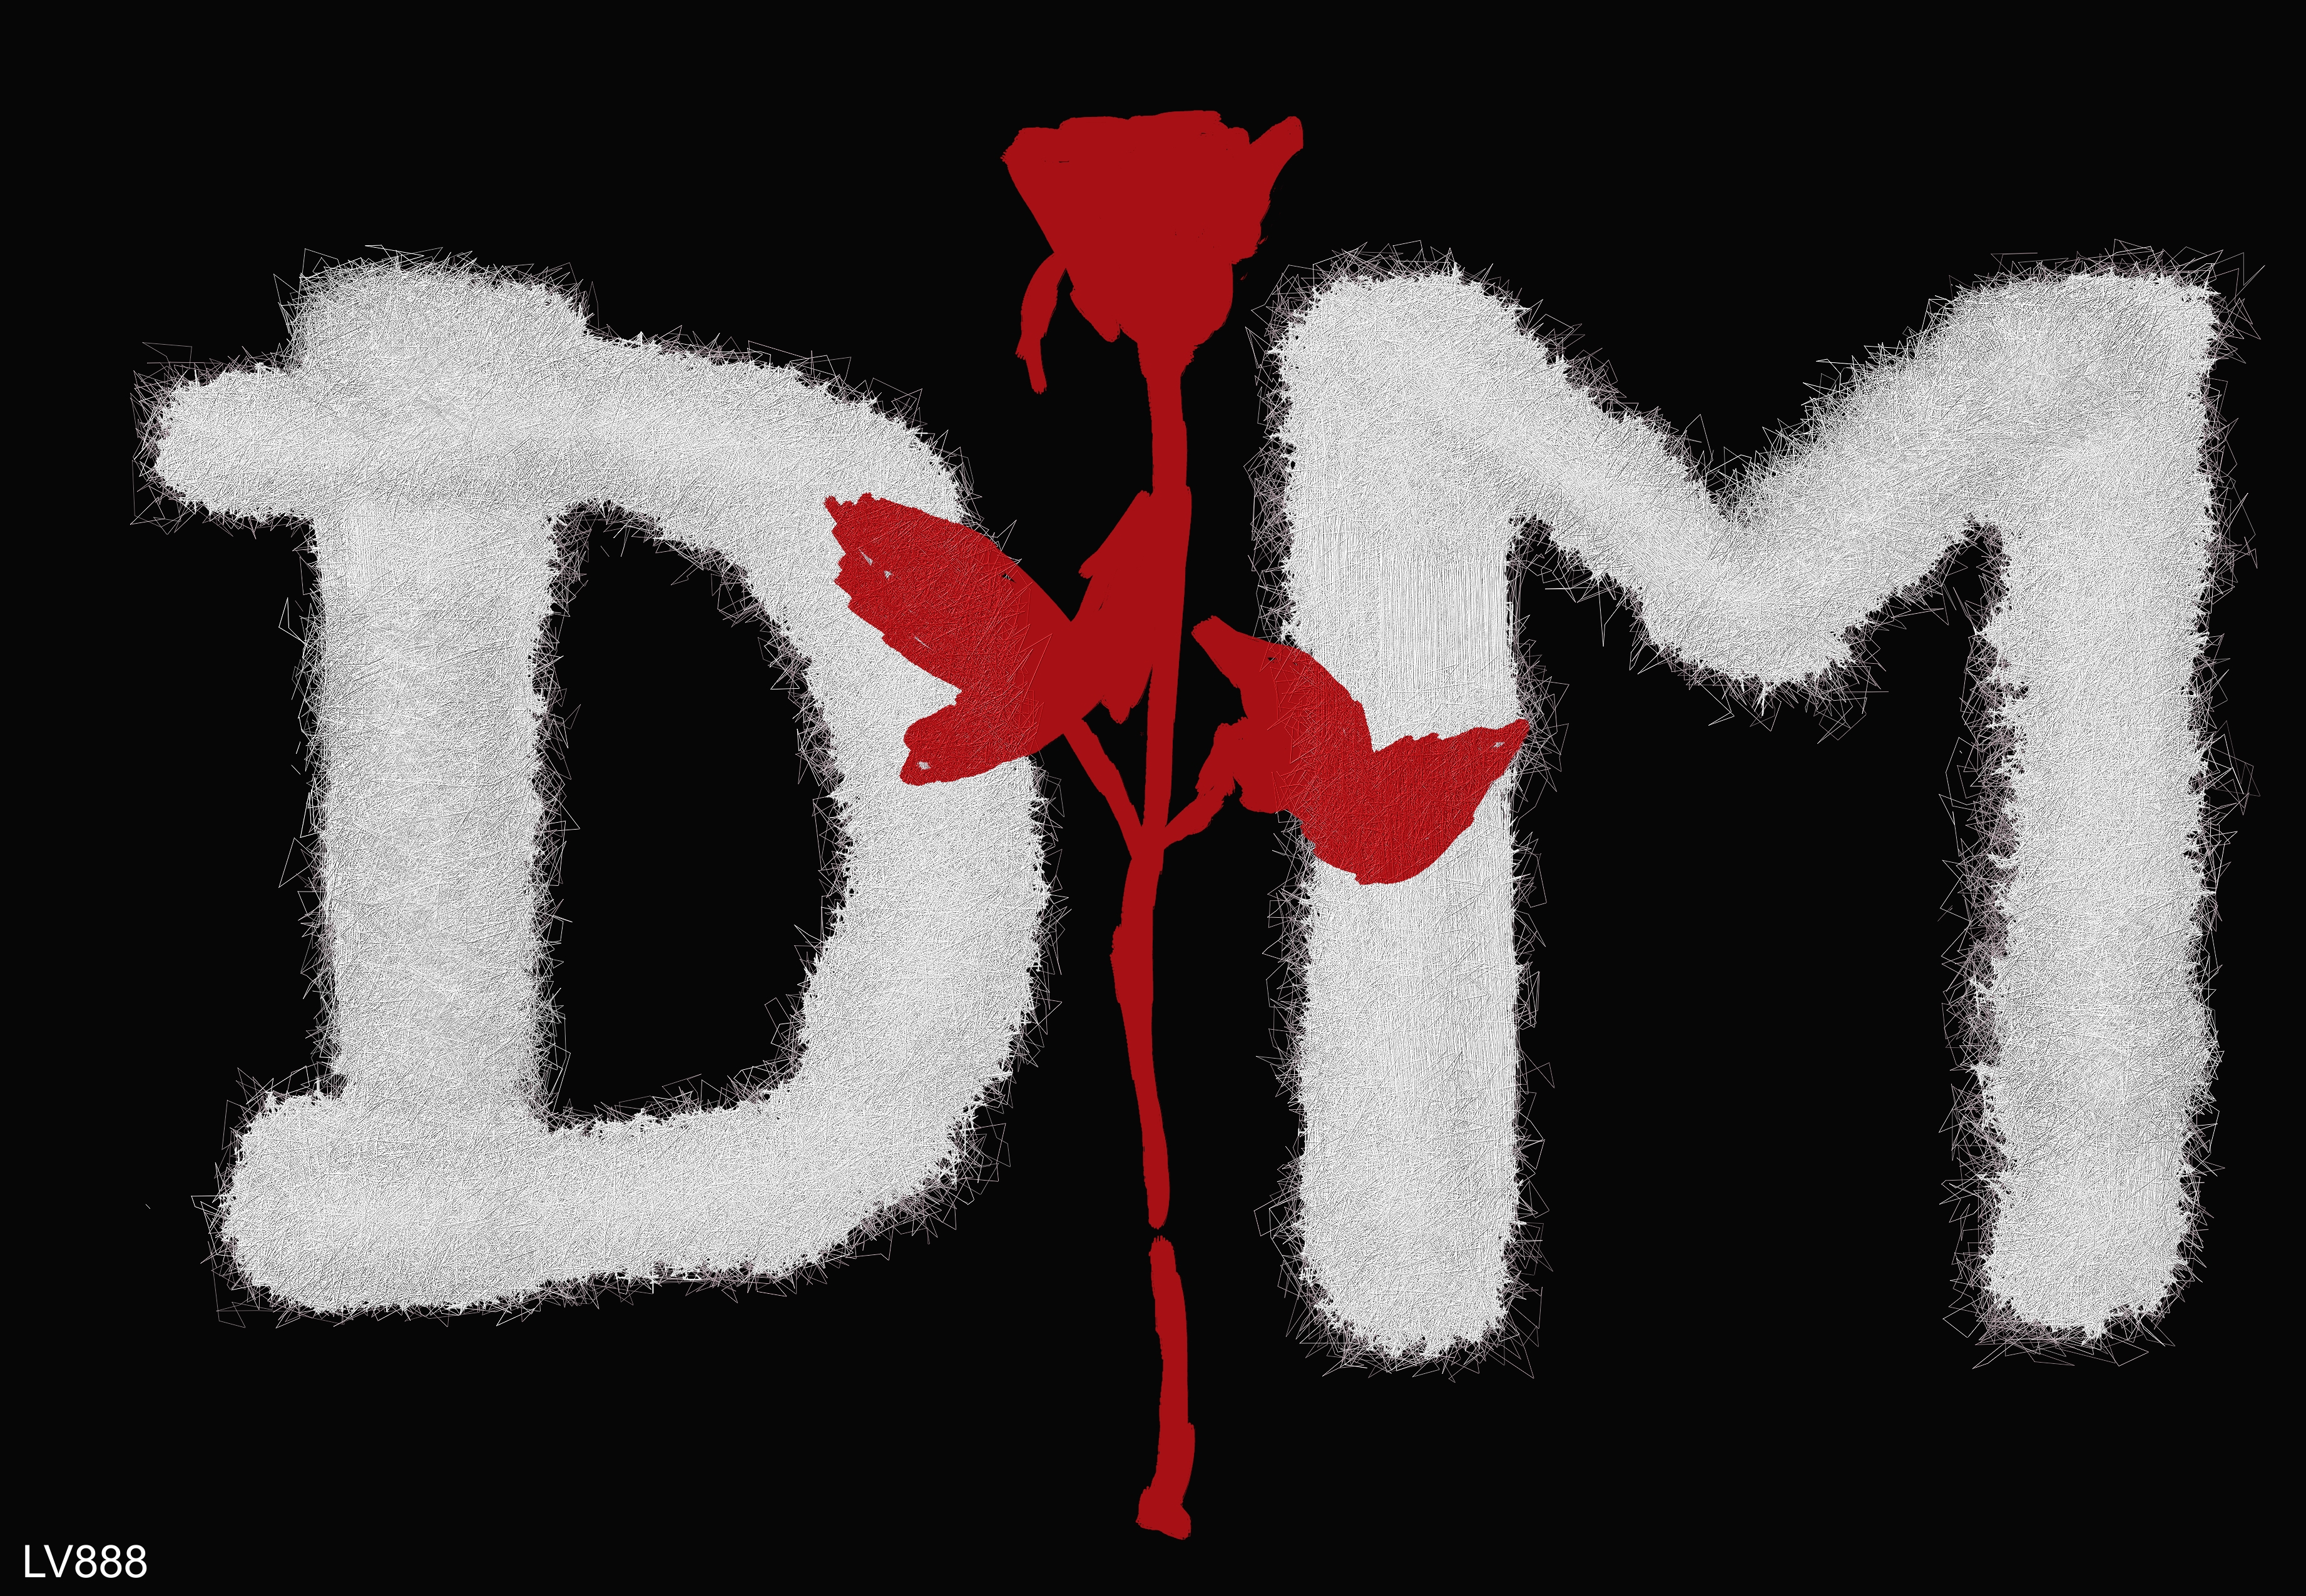 The Depeche Mode logo : r/depechemode